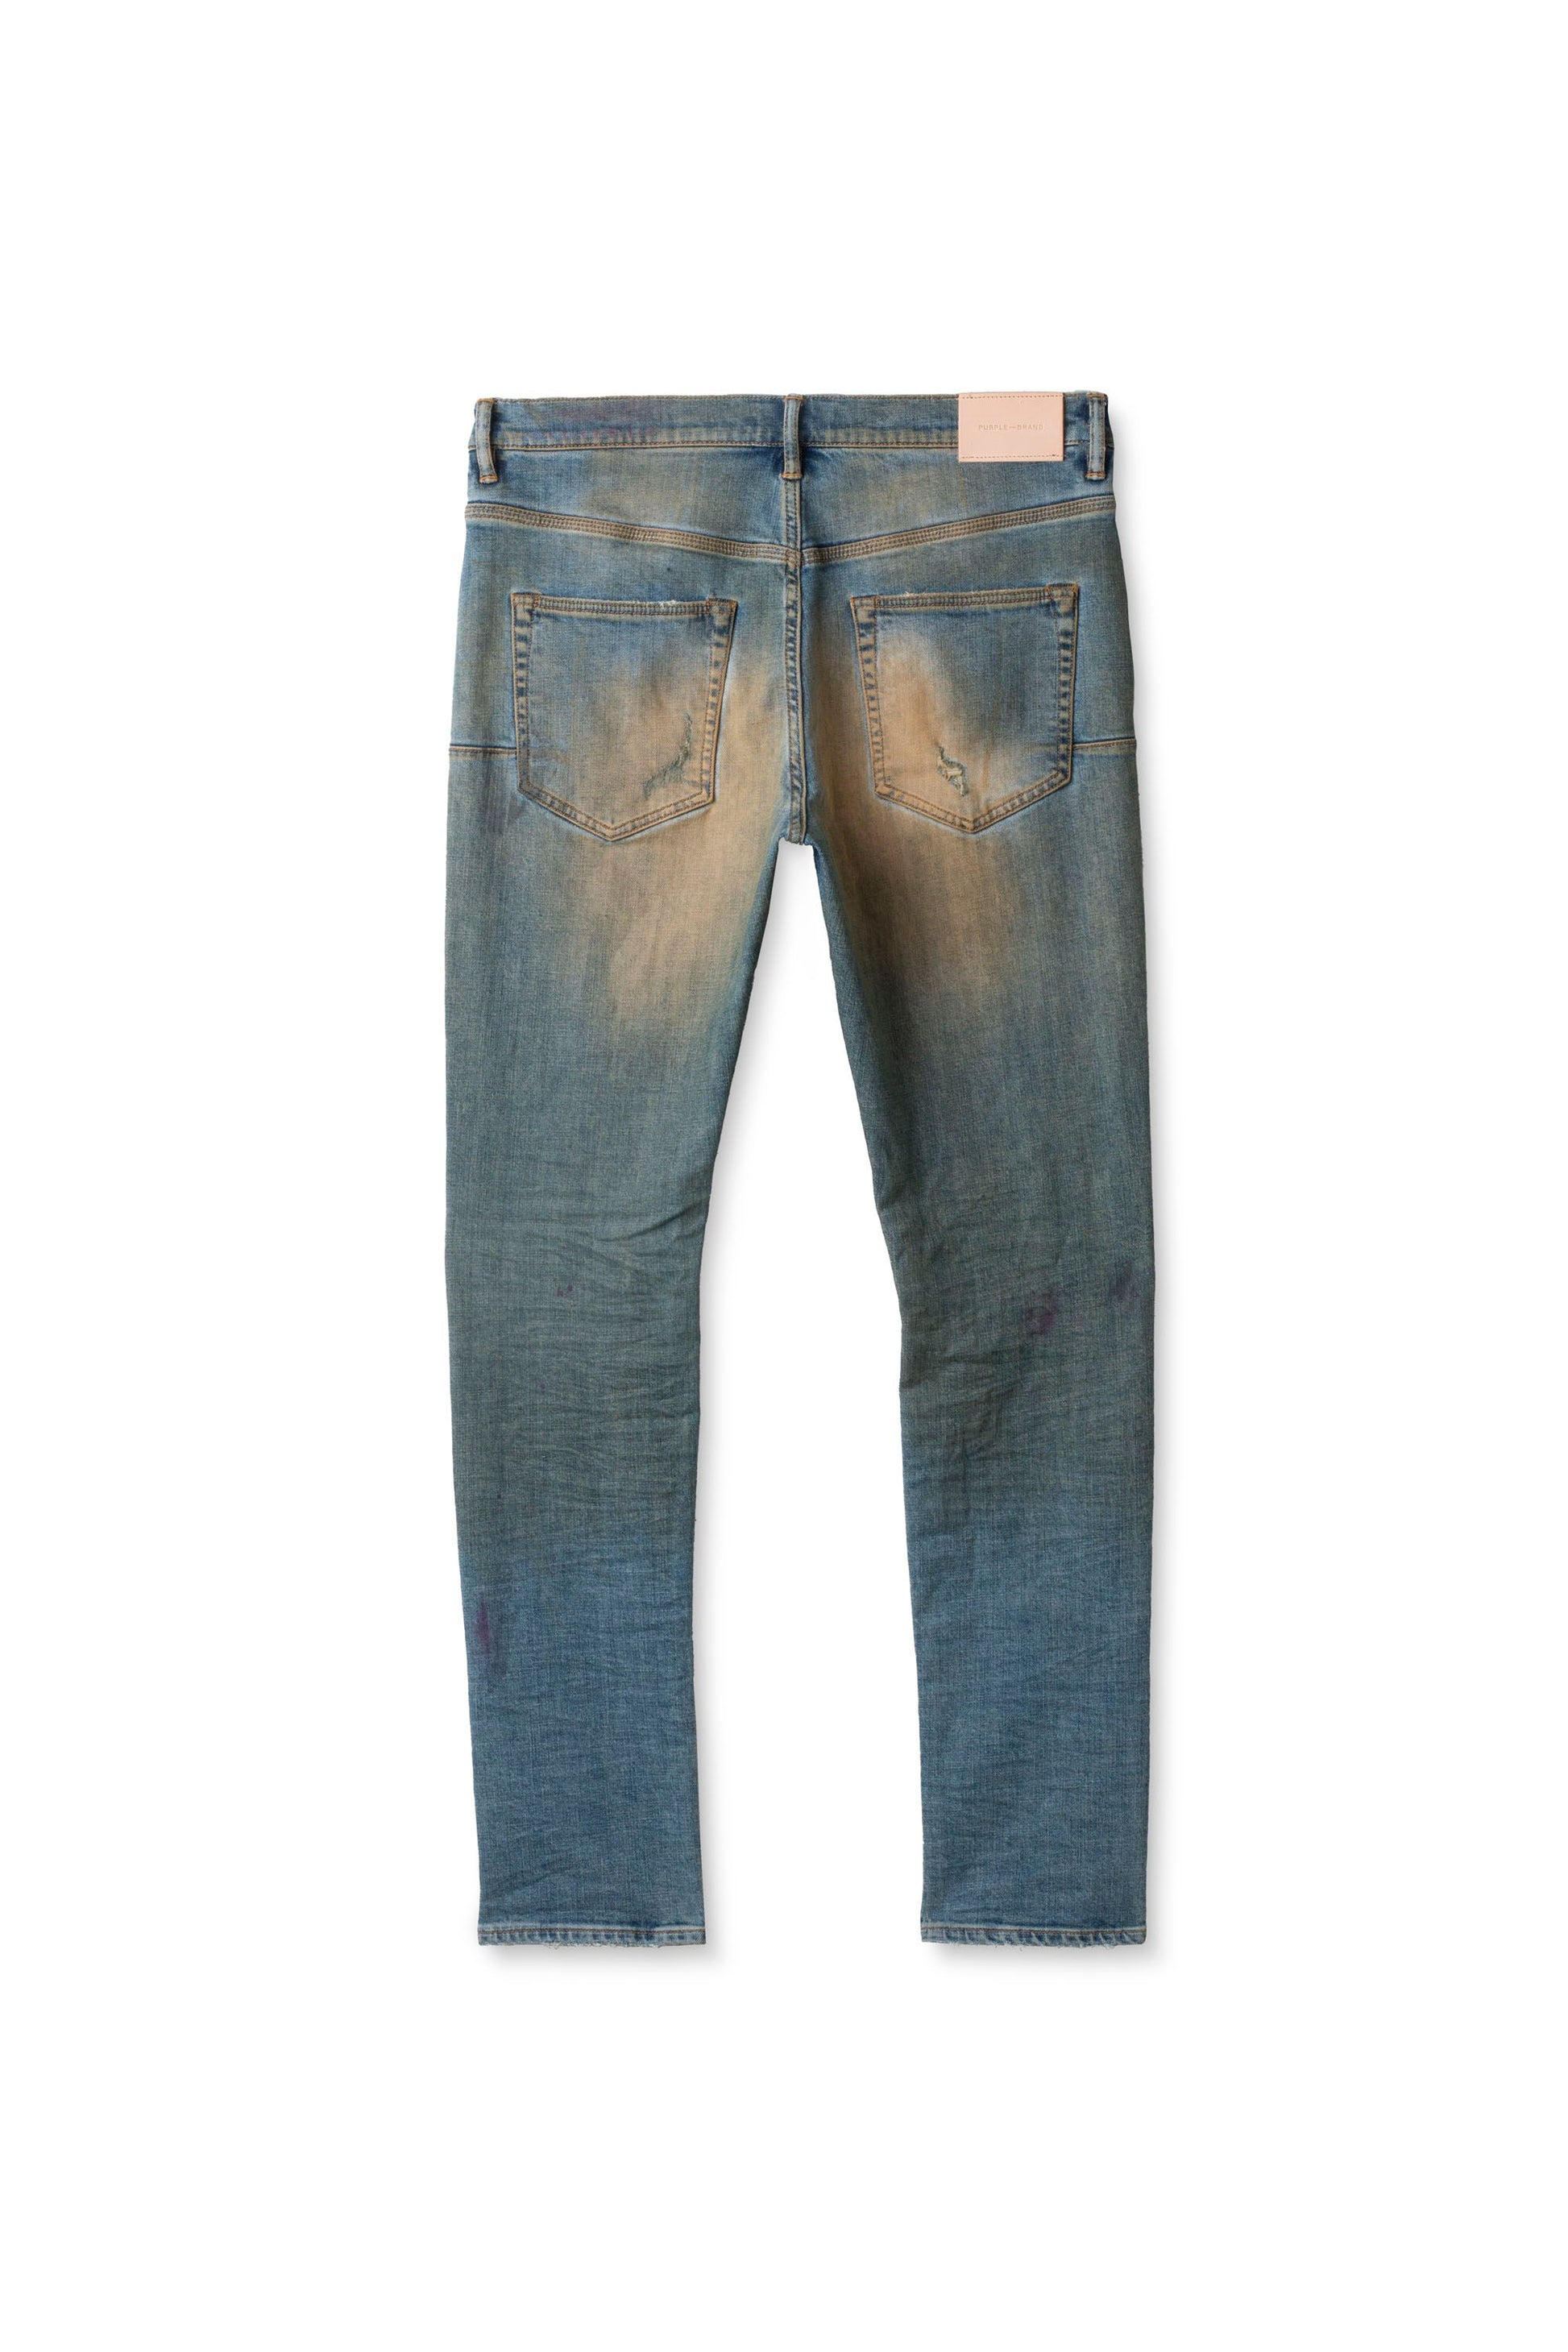 PURPLE BRAND - Men's Denim Jean - Mid Rise Slim - Style No. P002 - Mid Blue Patched - Back